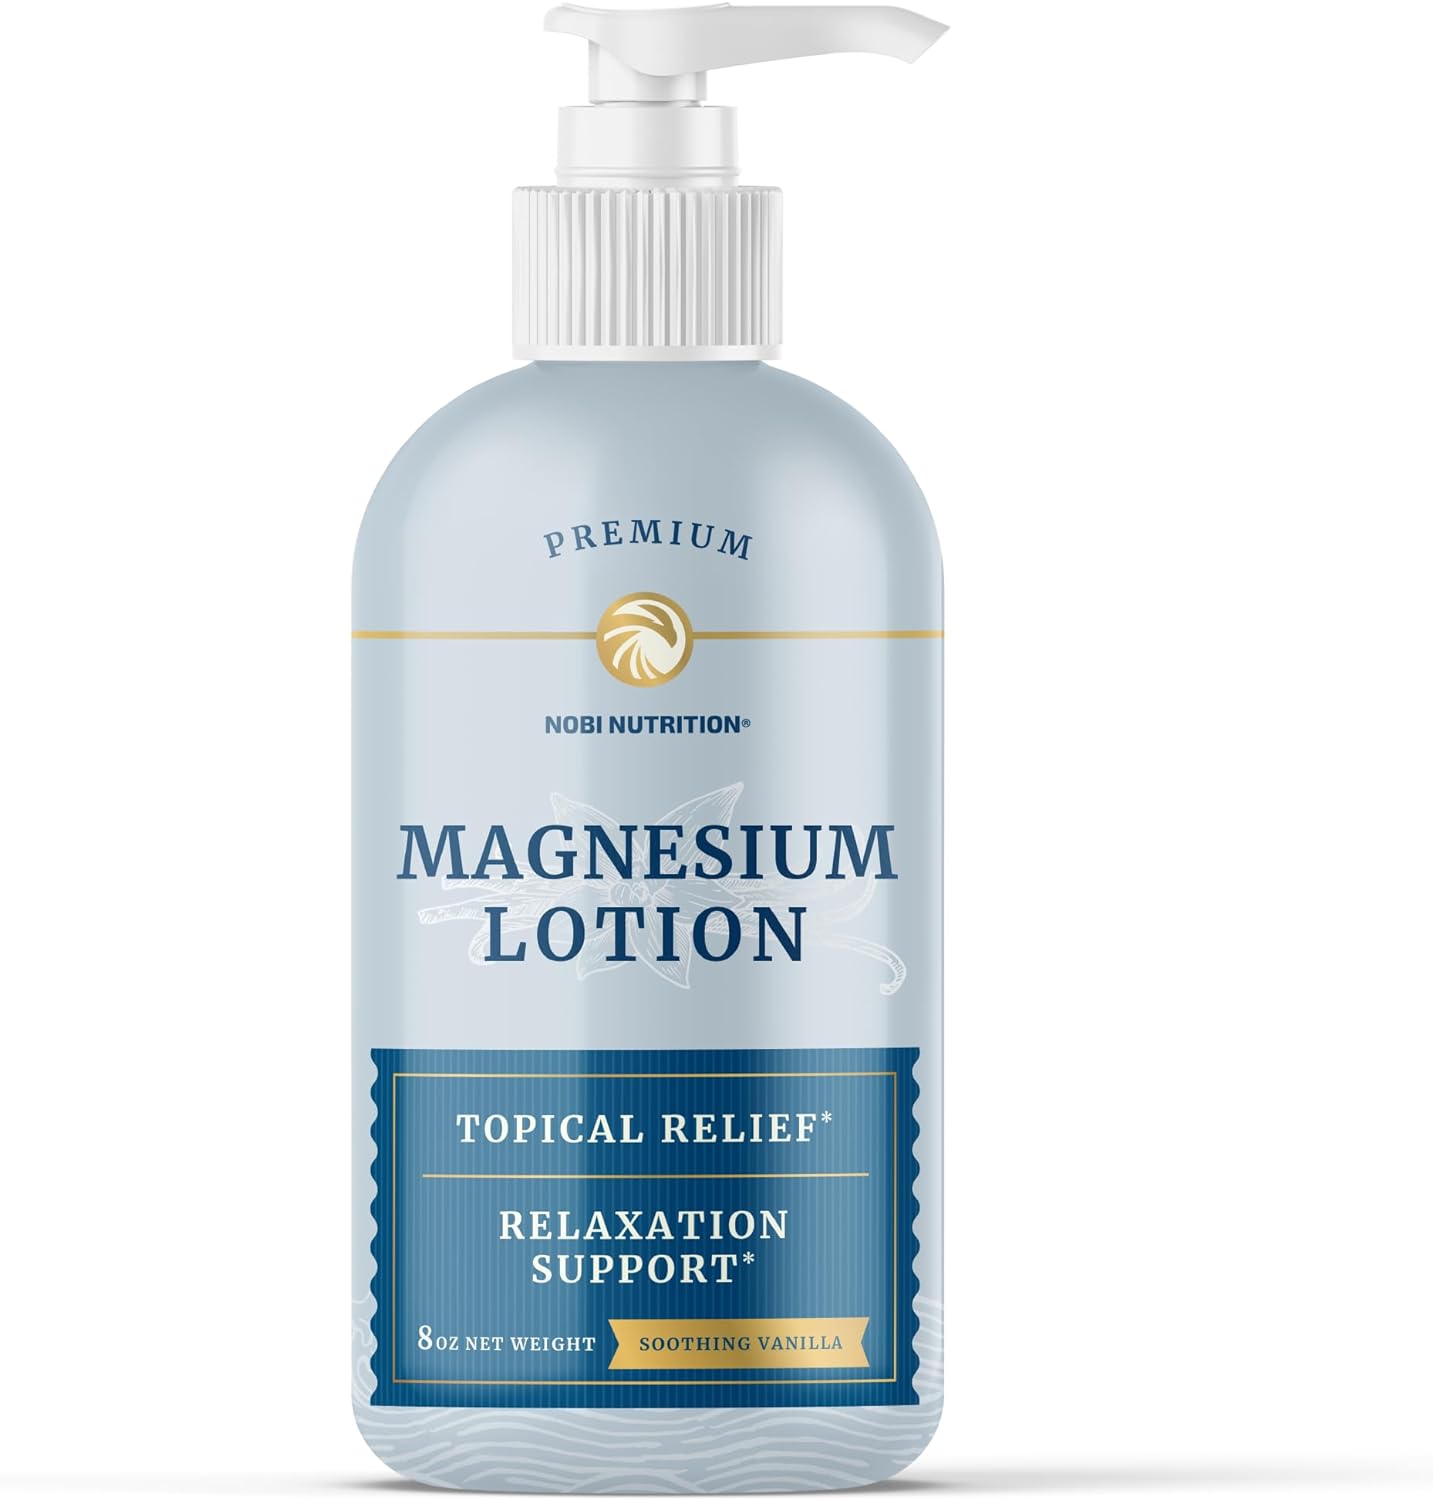 magnesium lotion